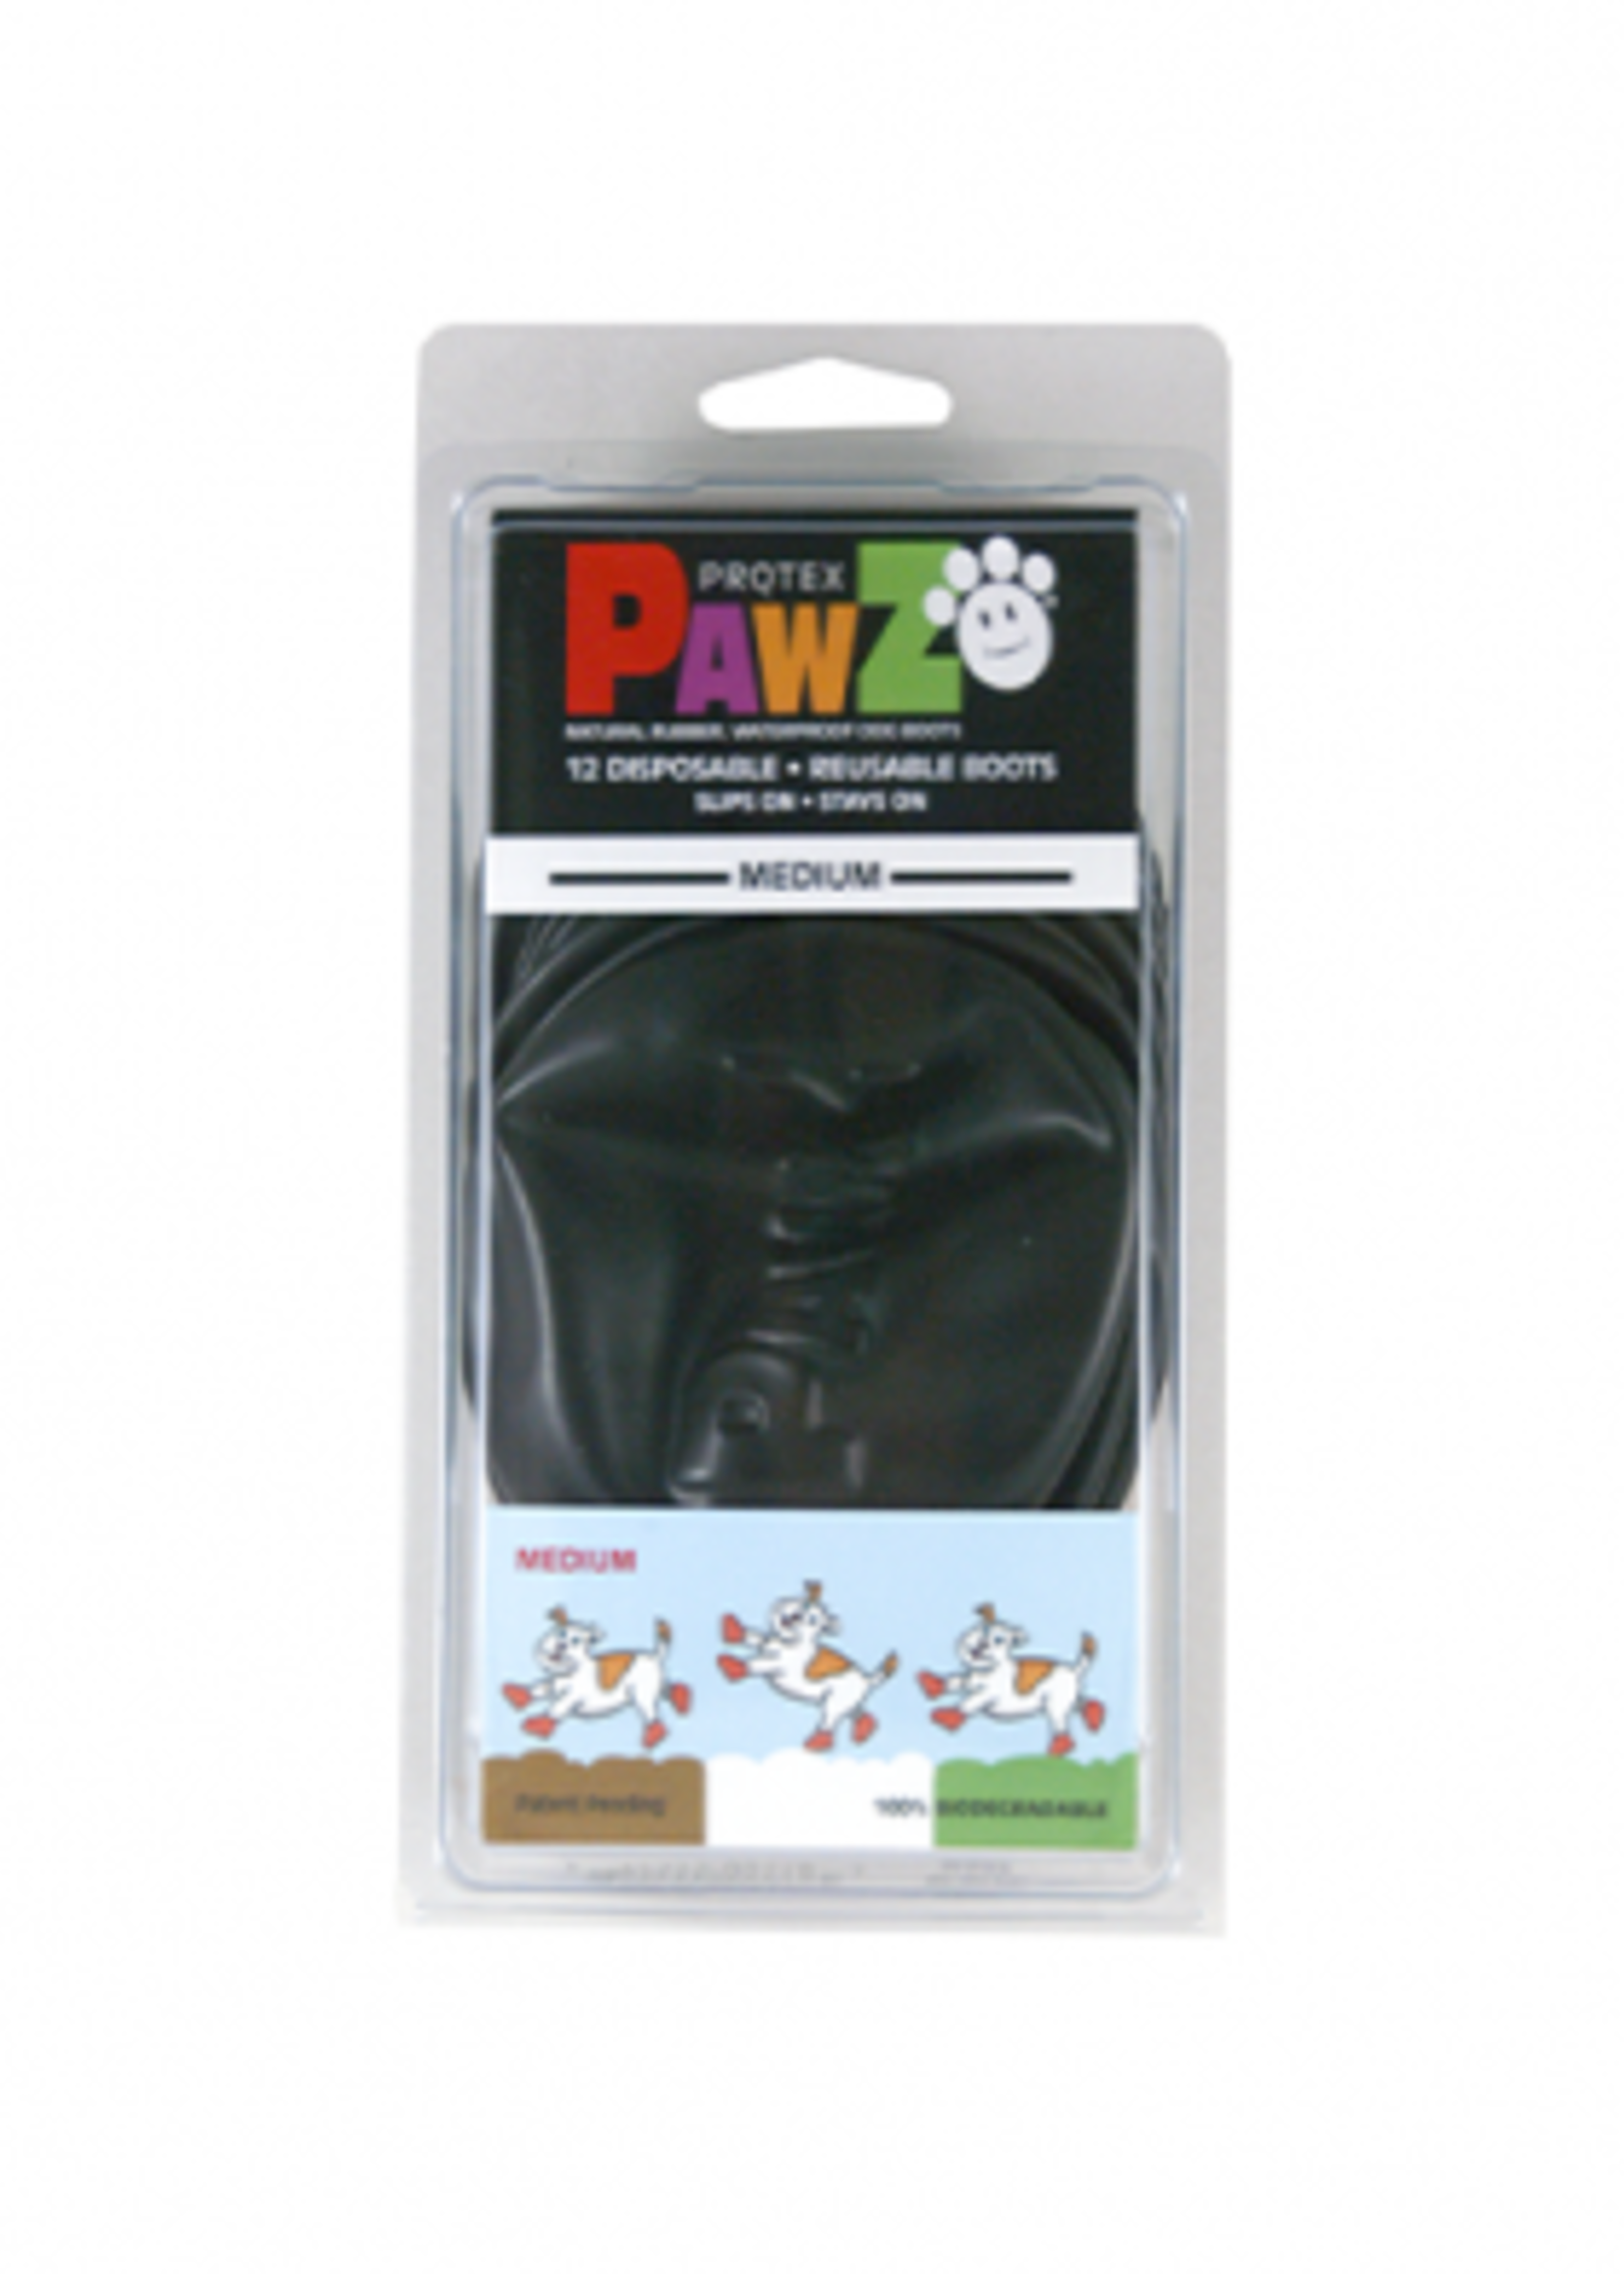 Pawz® Pawz® Rubber Dog Boots Medium